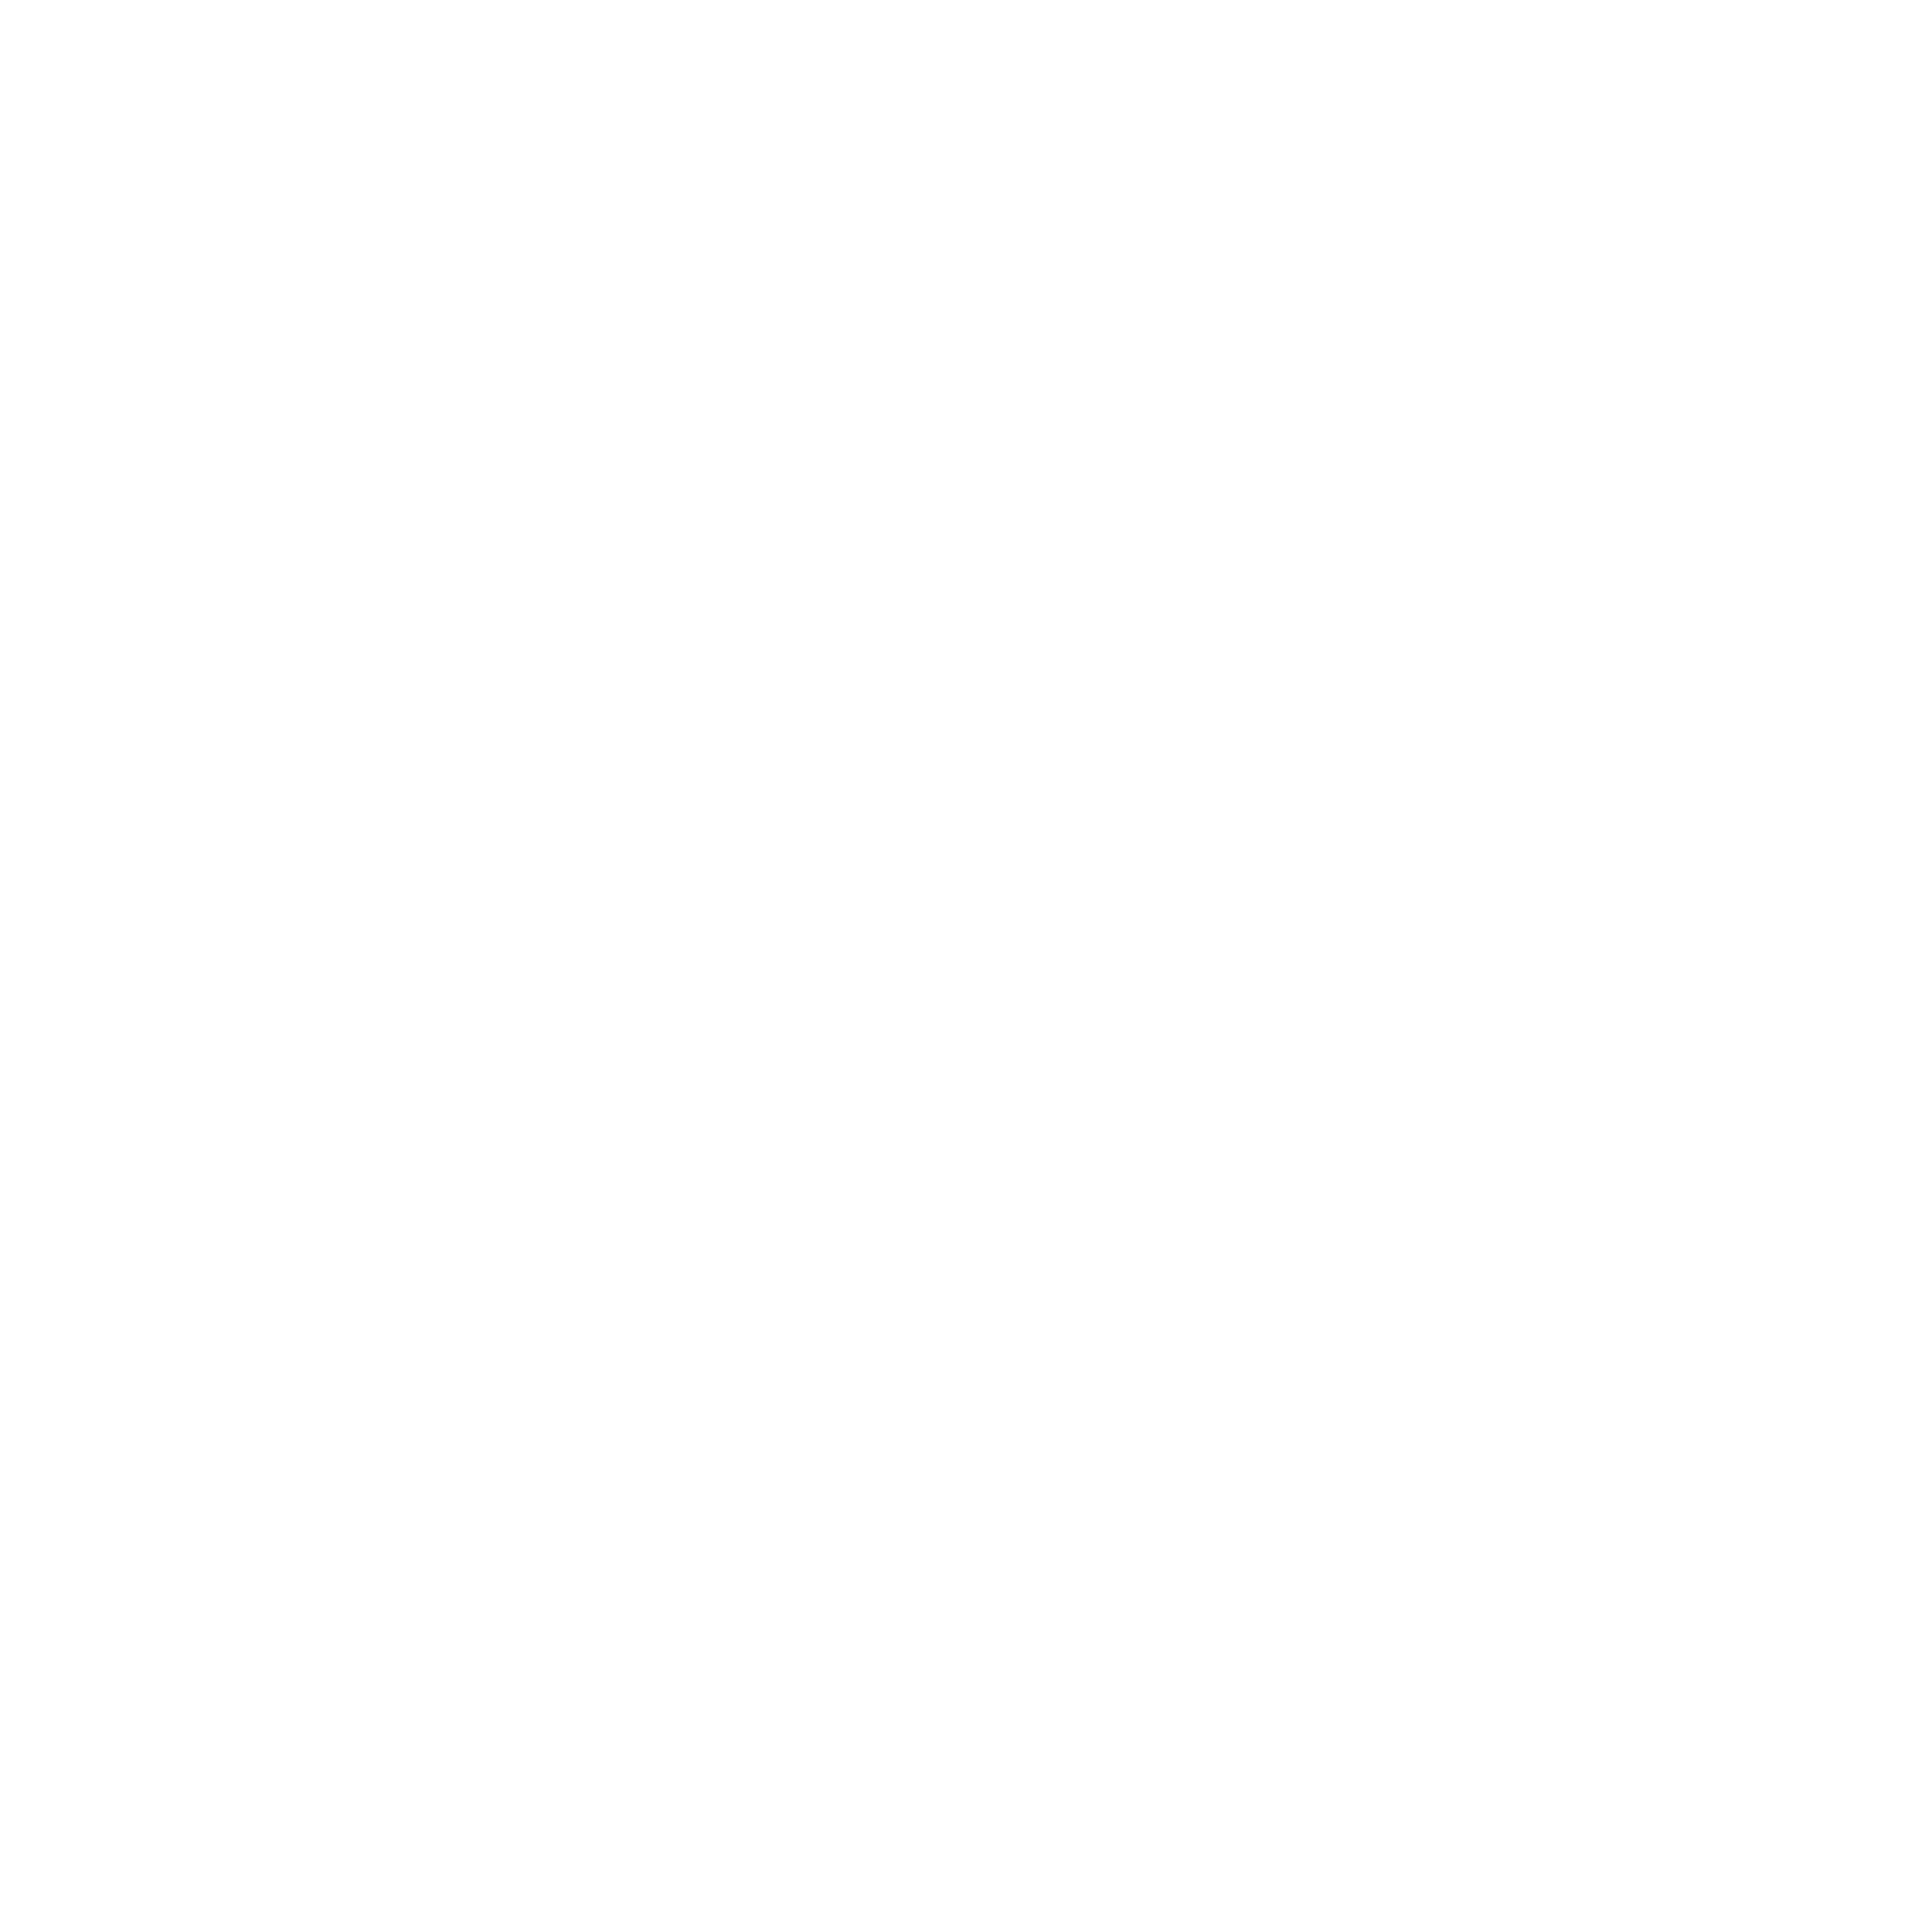 Seed to Soul Gardening